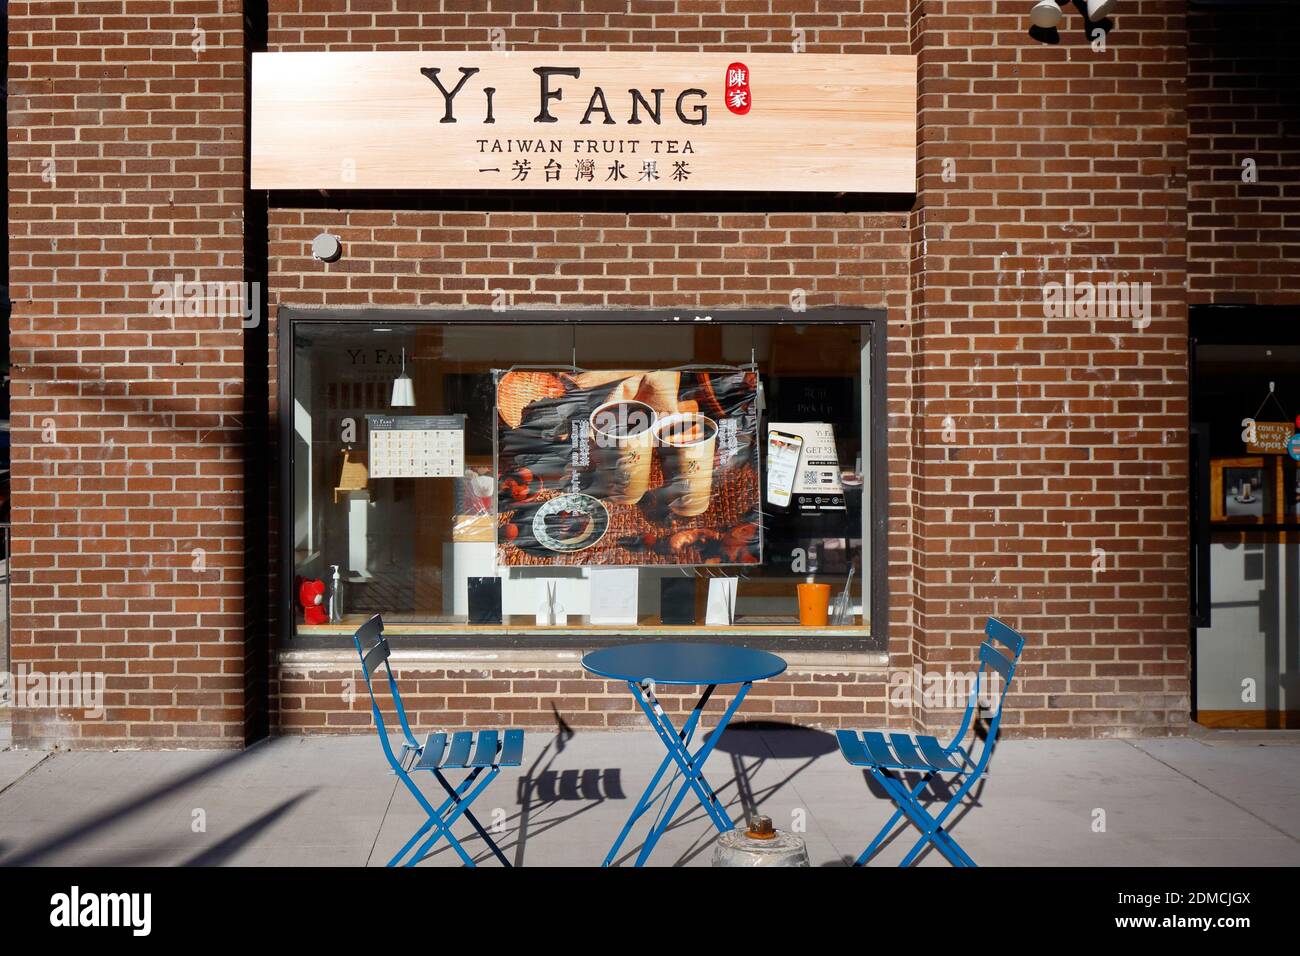 Yi Fang Taiwan Fruit Tea 一芳台灣水果茶, 61 Lexington Ave, New York, NYC storefront photo of a bubble tea shop in the Rose Hill neighborhood of Manhattan. Stock Photo